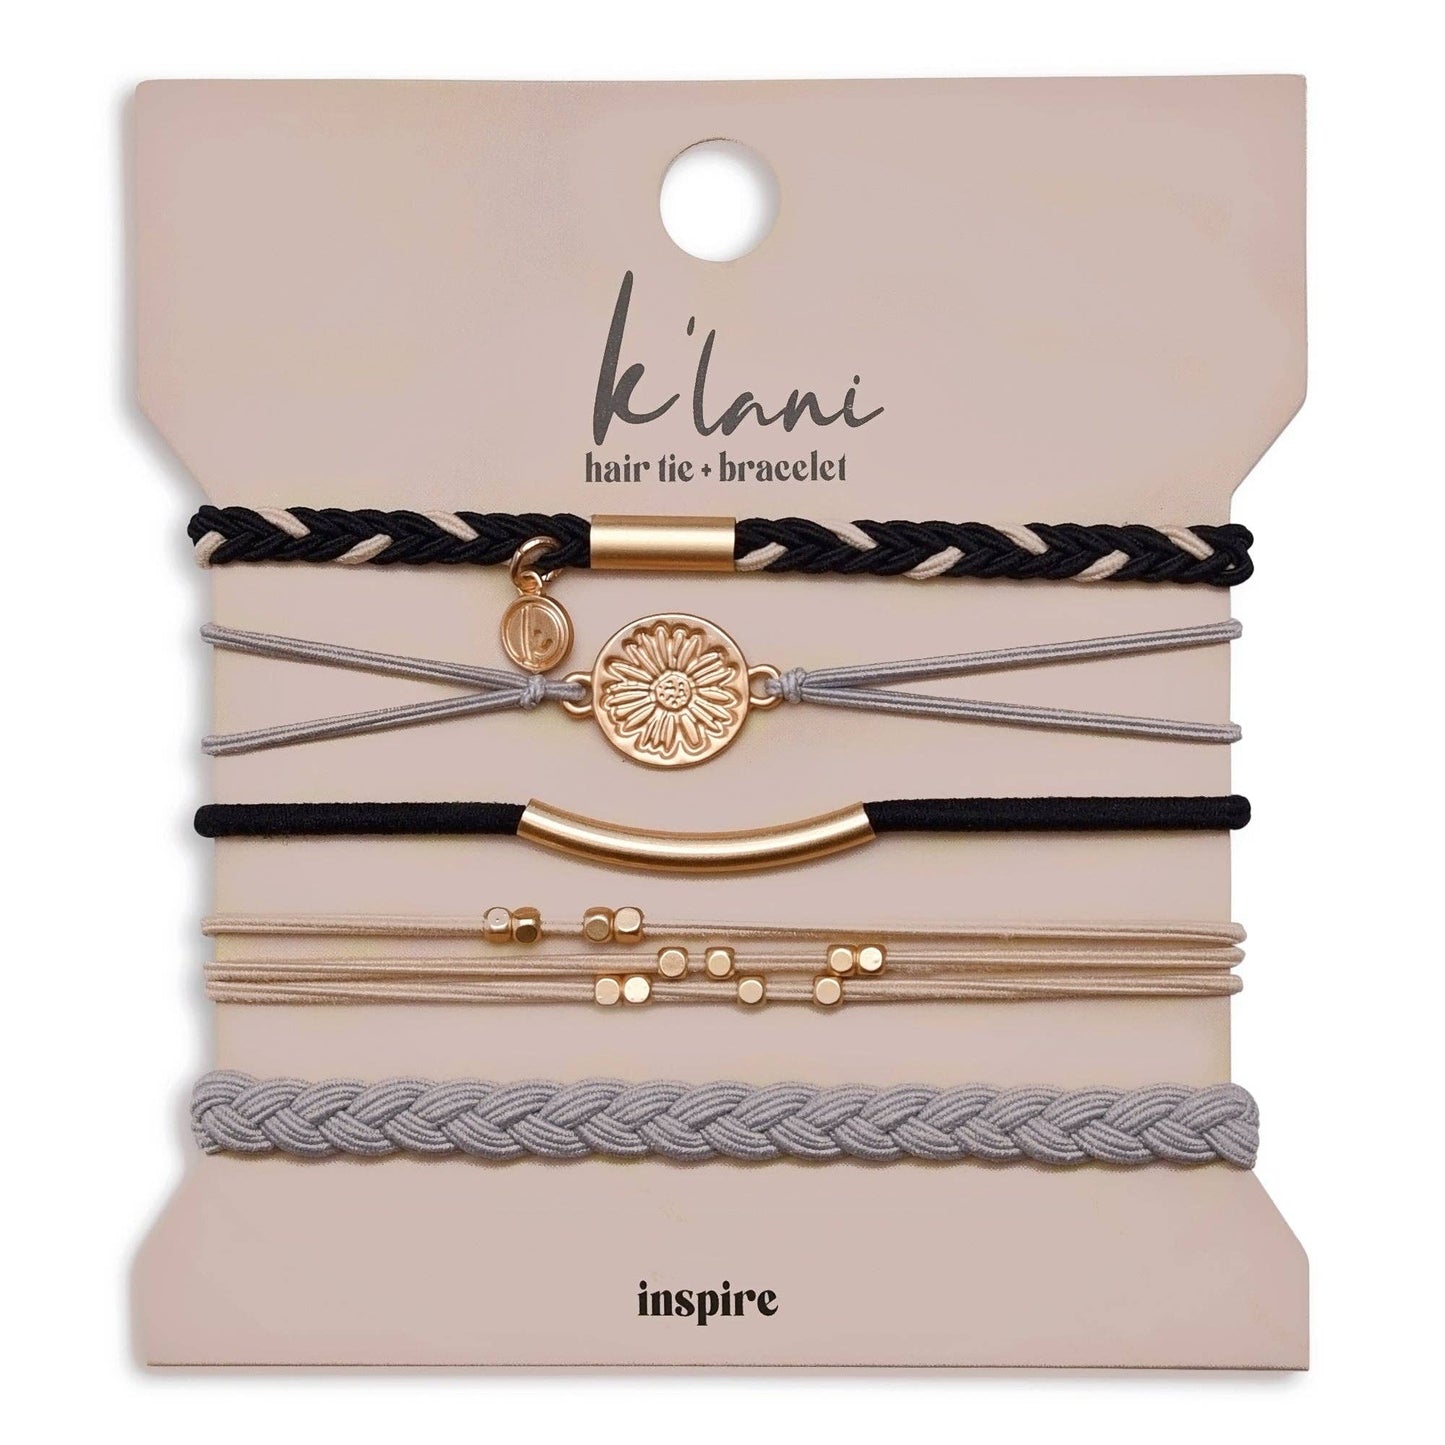 K'Lani Hair Tie Bracelets - Inspire - Large